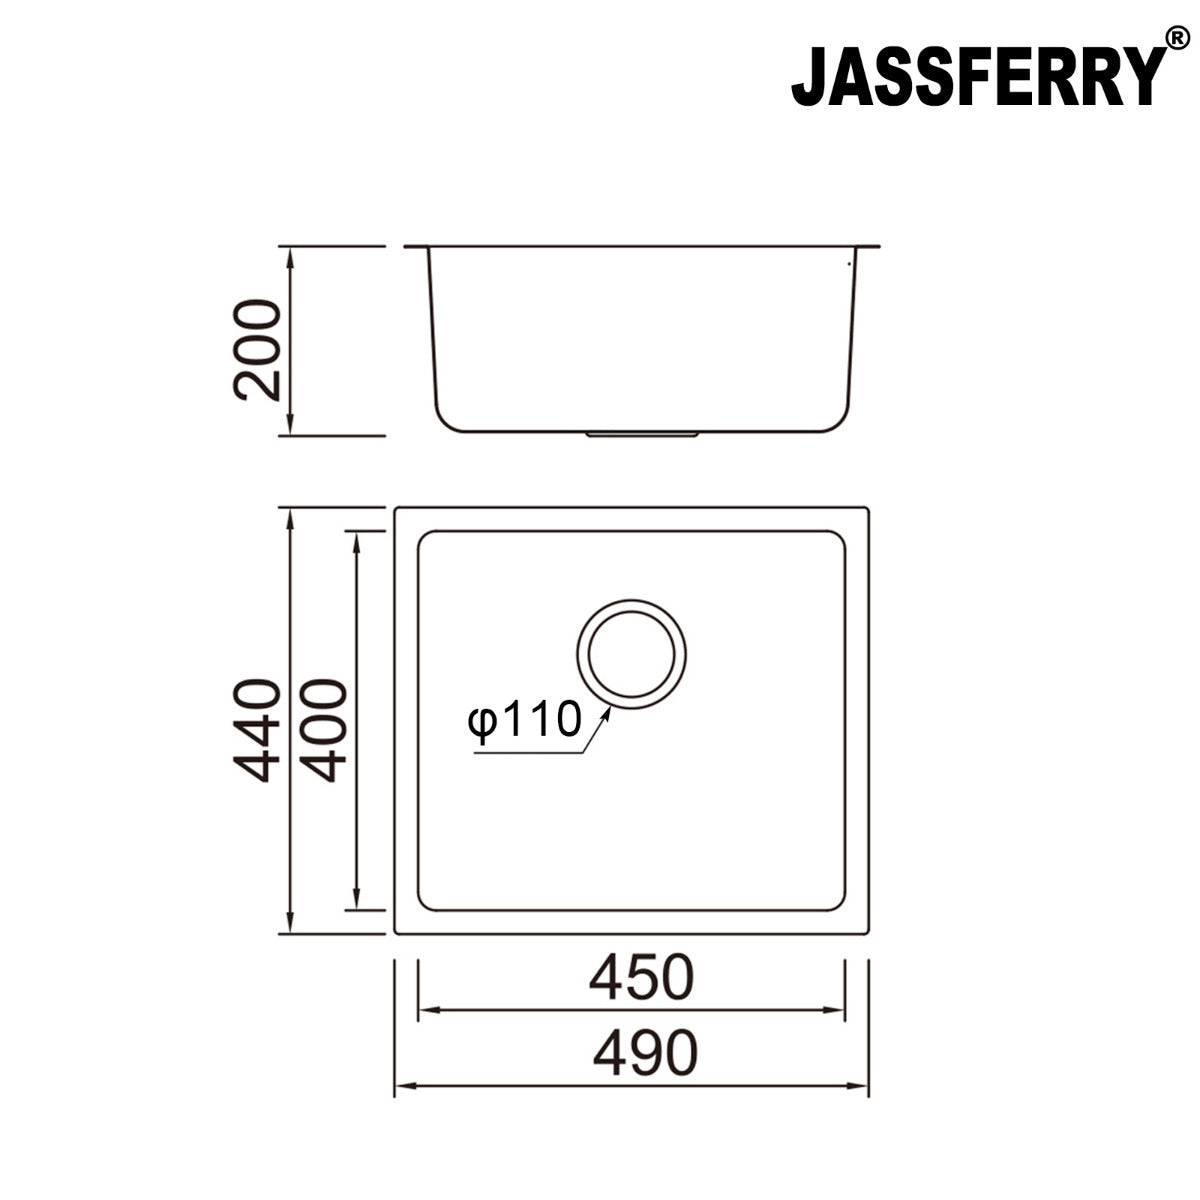 JassferryJASSFERRY Undermount Stainless Steel Kitchen Sink Deep Single One Bowl - 794Kitchen Sinks